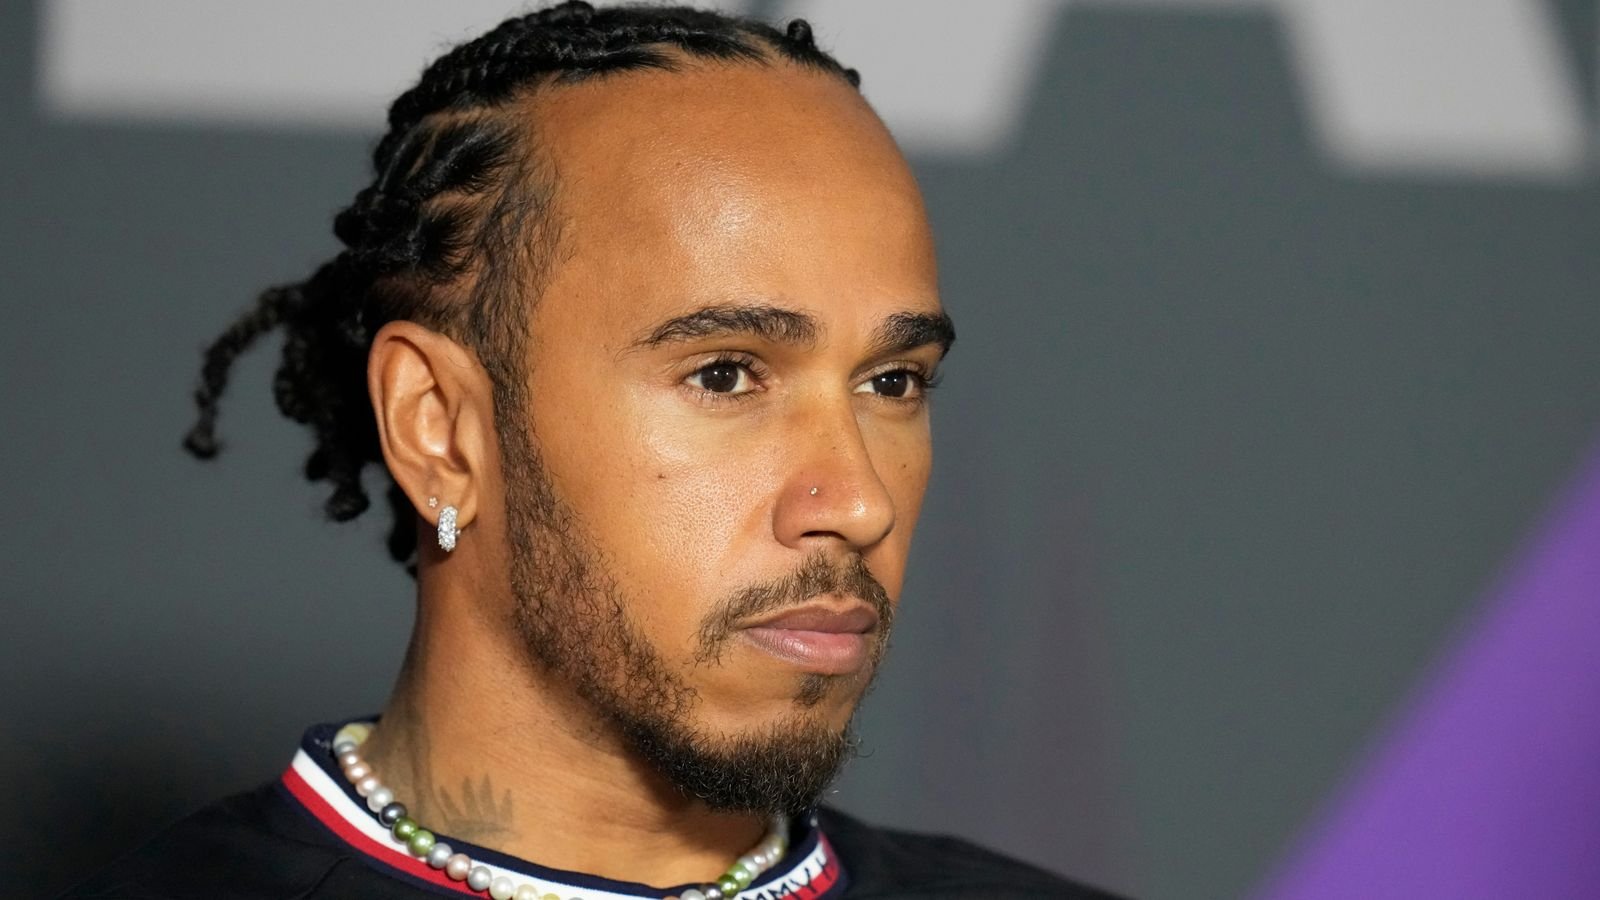 Lewis Hamilton: Mercedes F1 driver struggles to find positive after Bahrain Grand Prix in Sakhir | F1 News